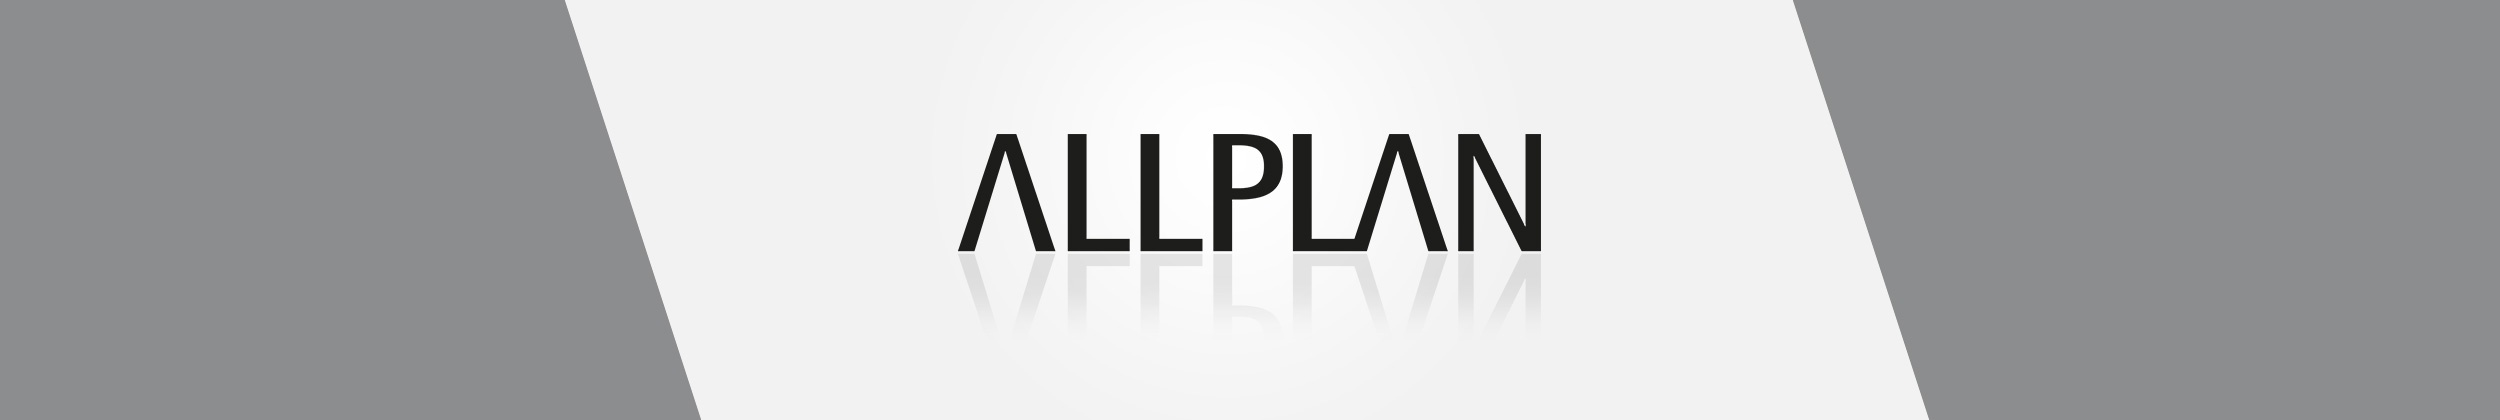 Allplan_04